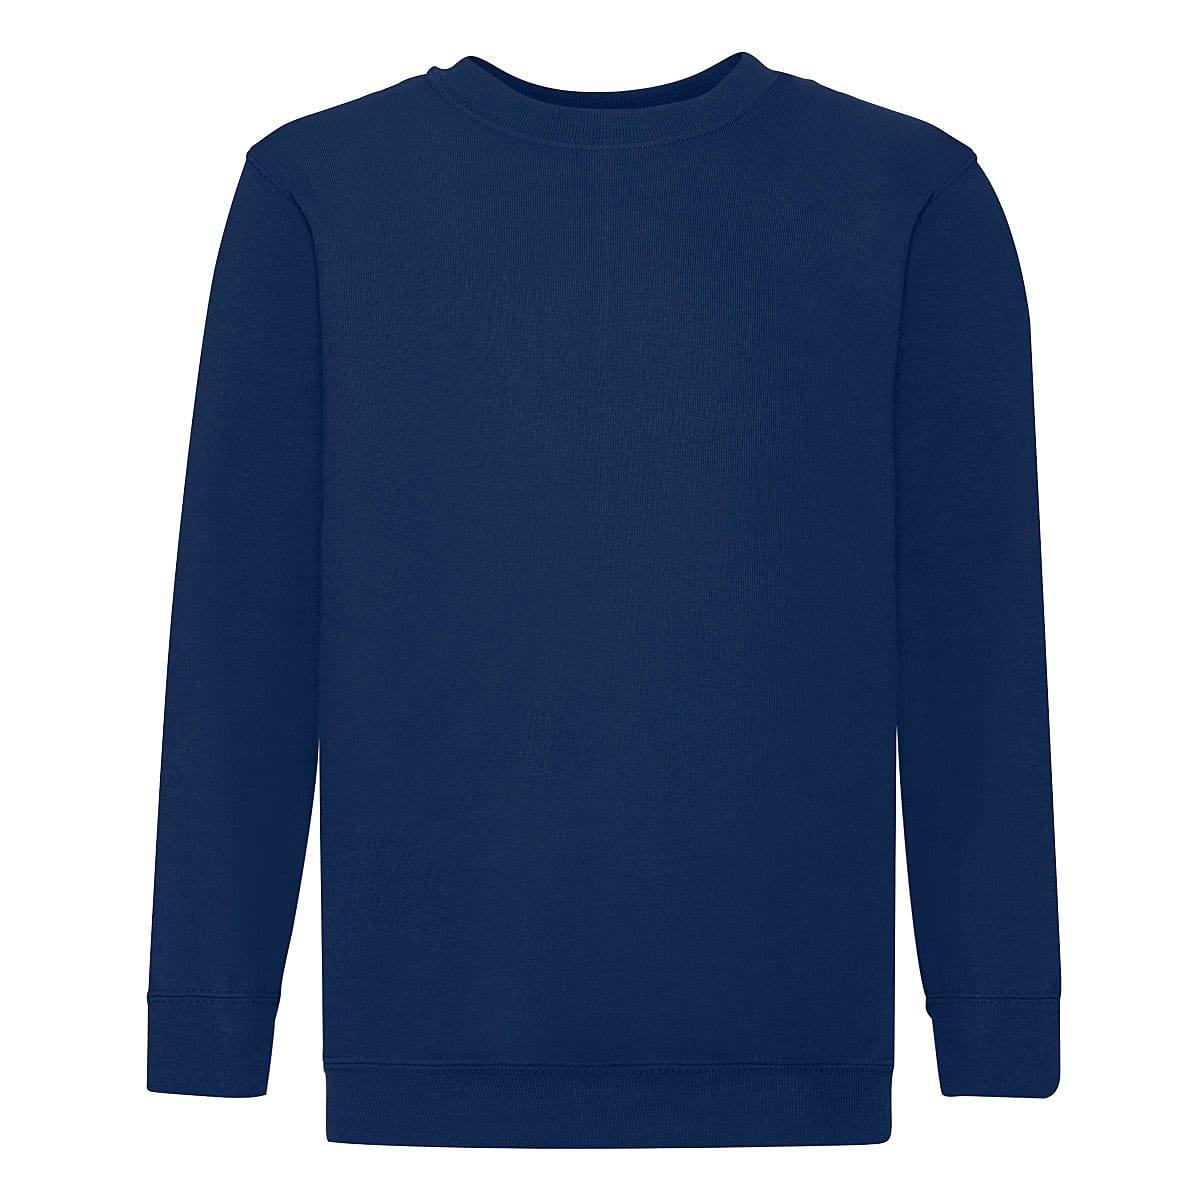 Fruit Of The Loom Childrens Set in Sleeve Sweatshirt in Navy Blue (Product Code: 62041)